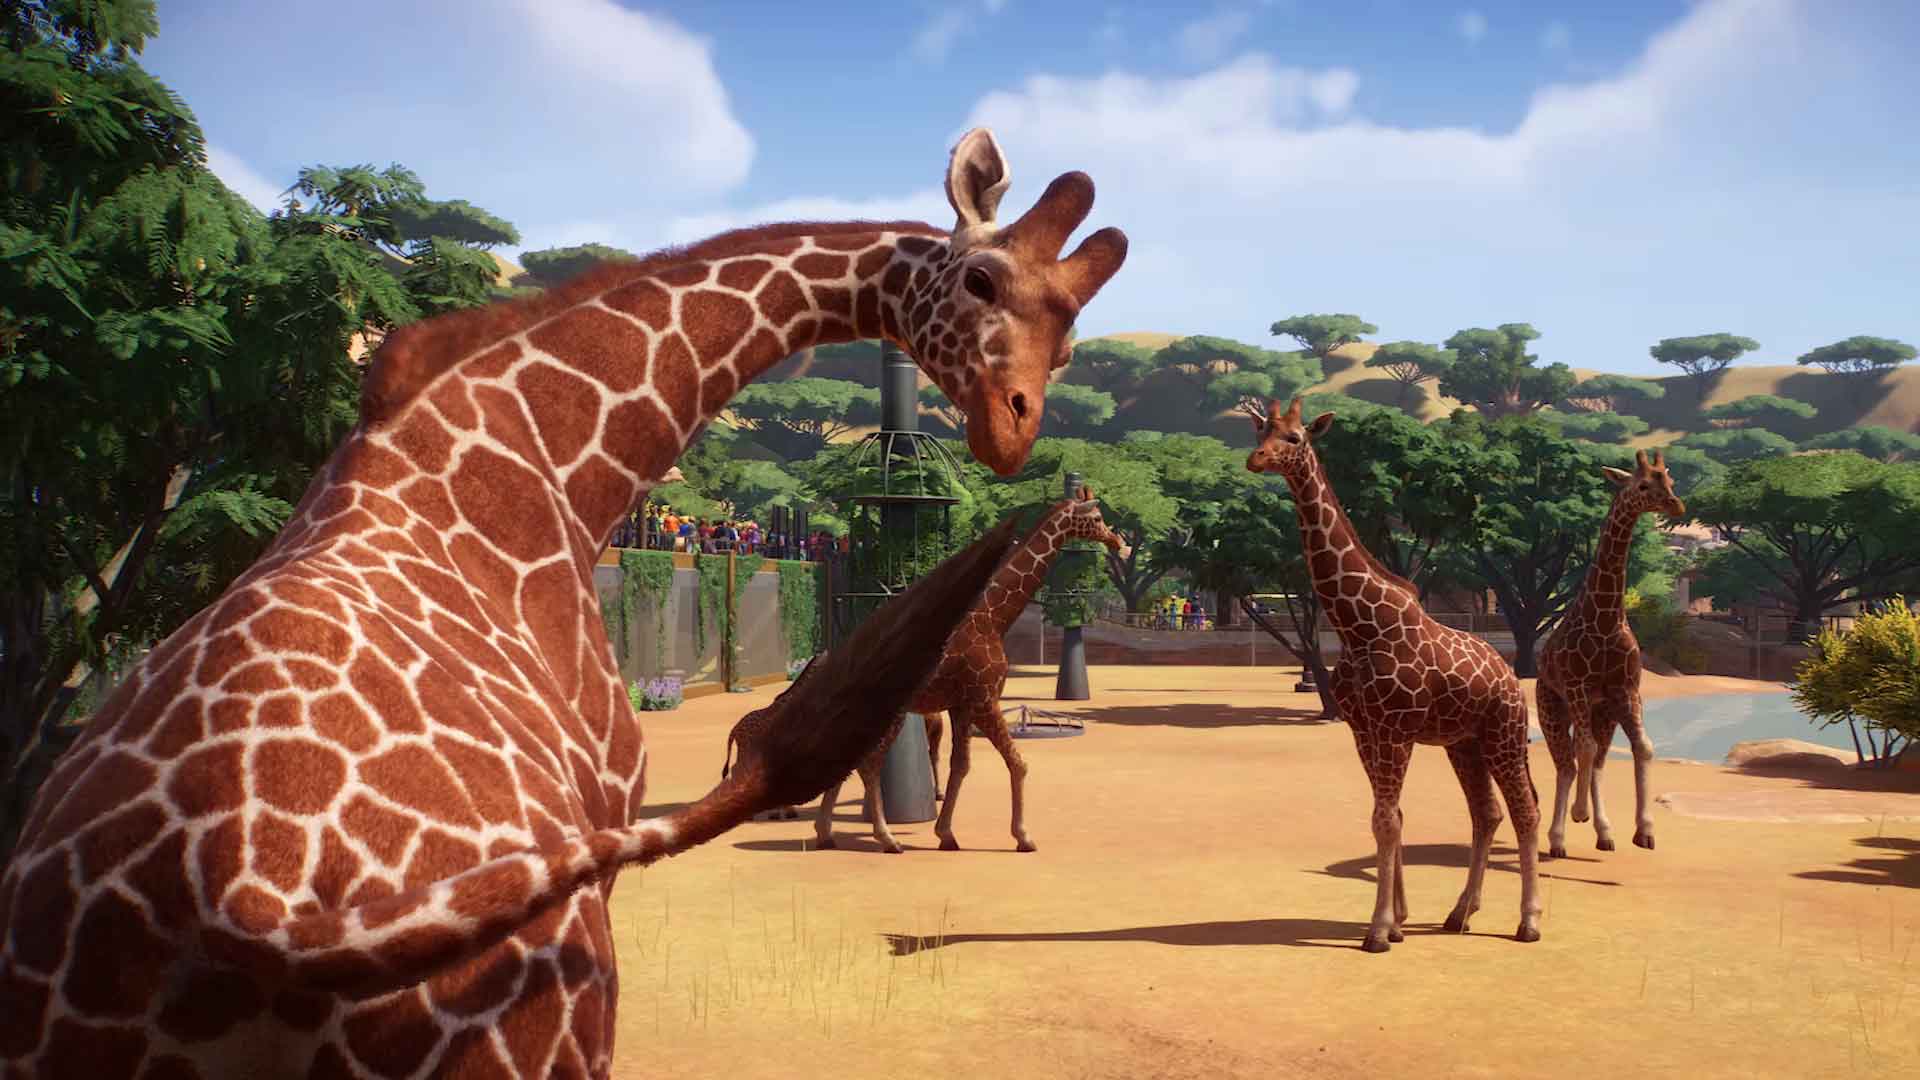 Planet zoo girafes